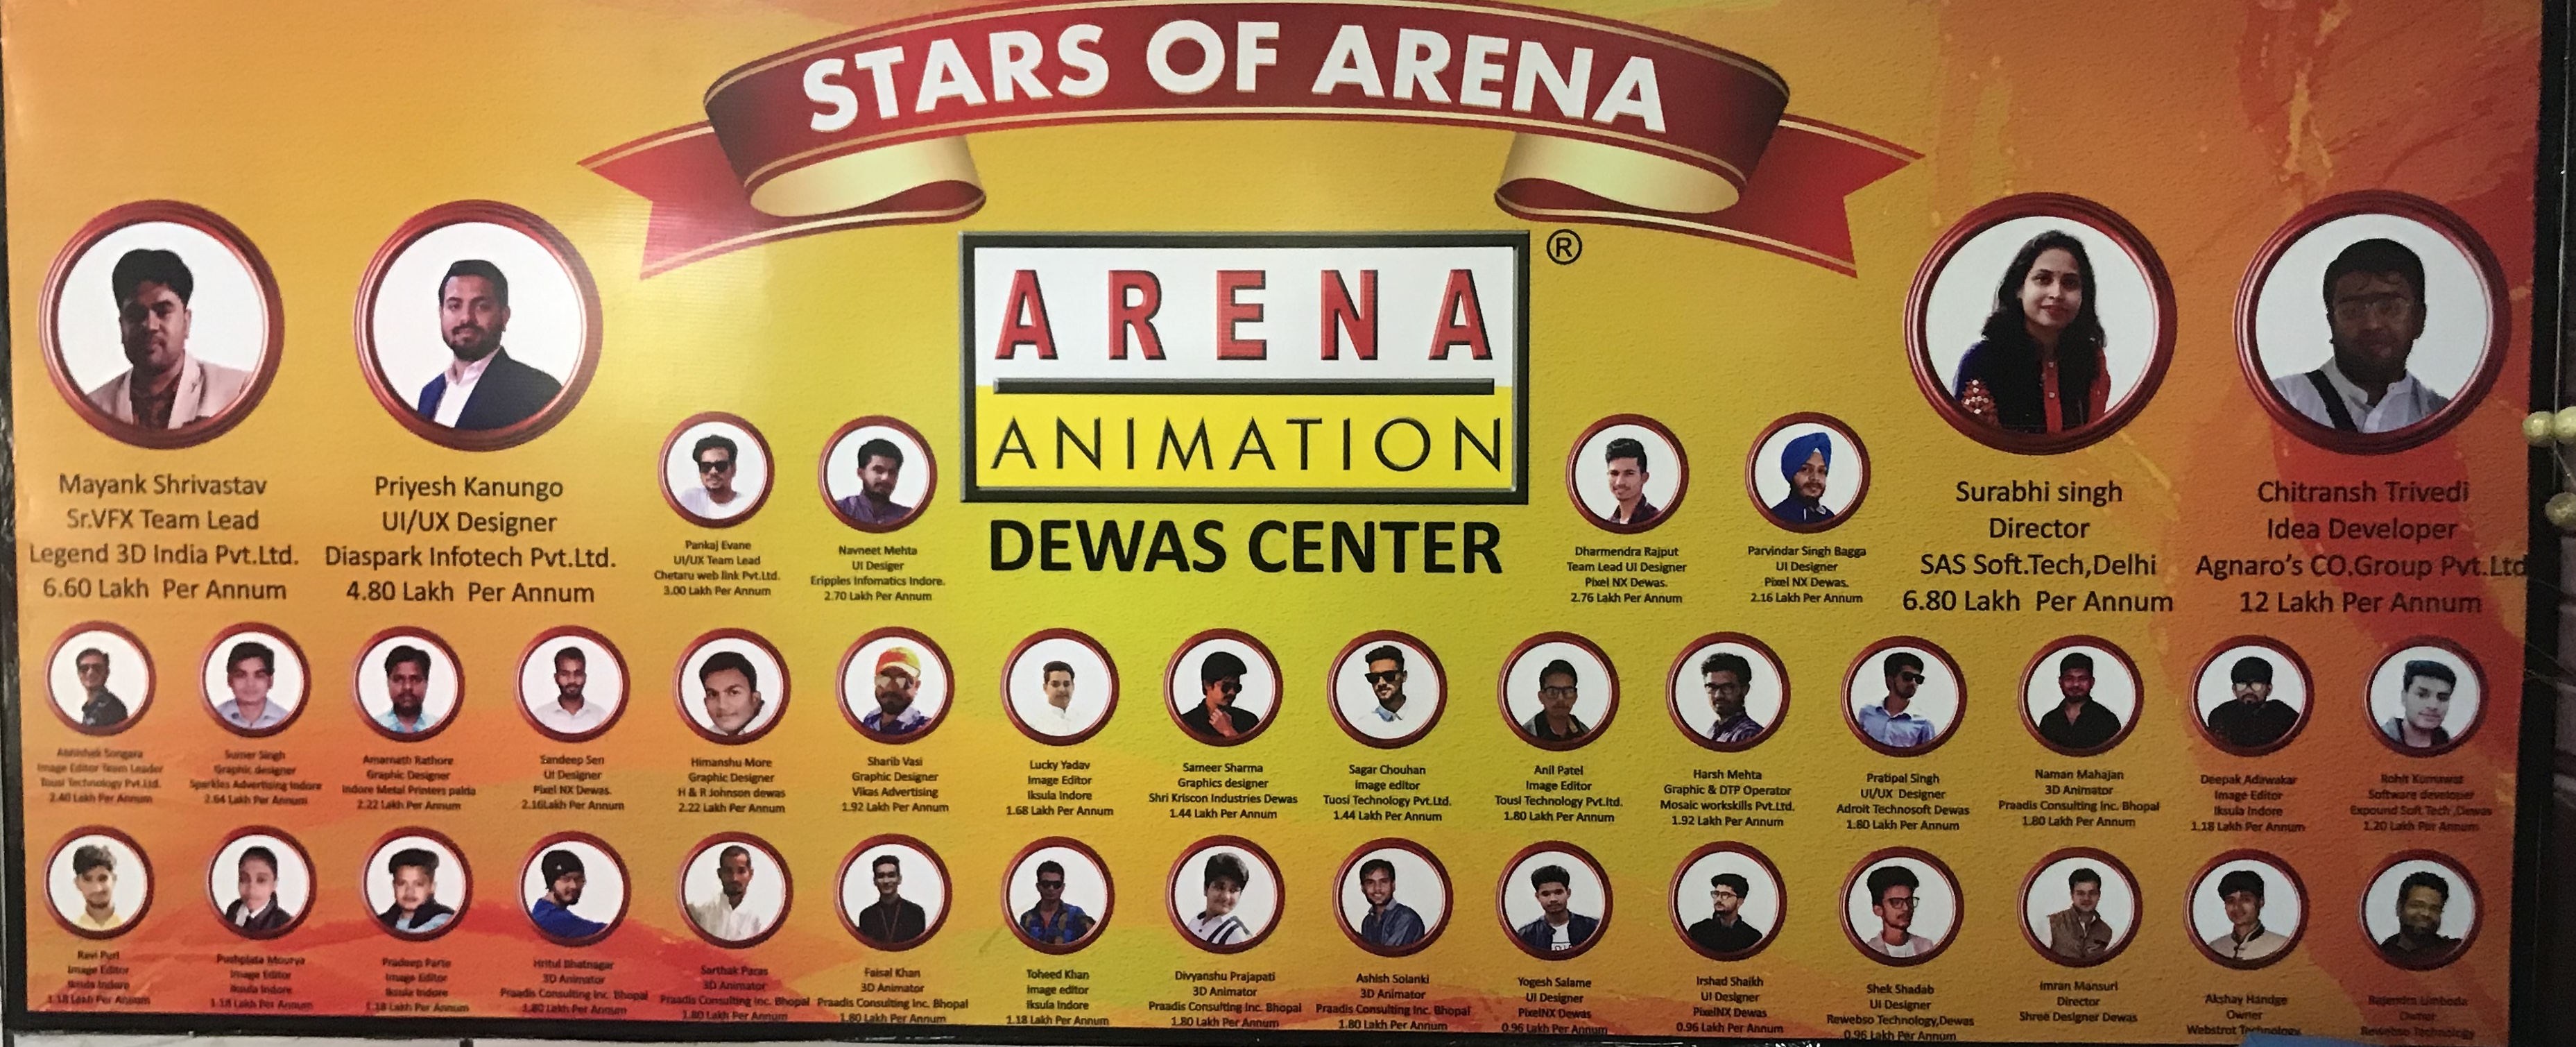 Arena Animation Dewas in Indore H O, Indore-452001 | Sulekha Indore